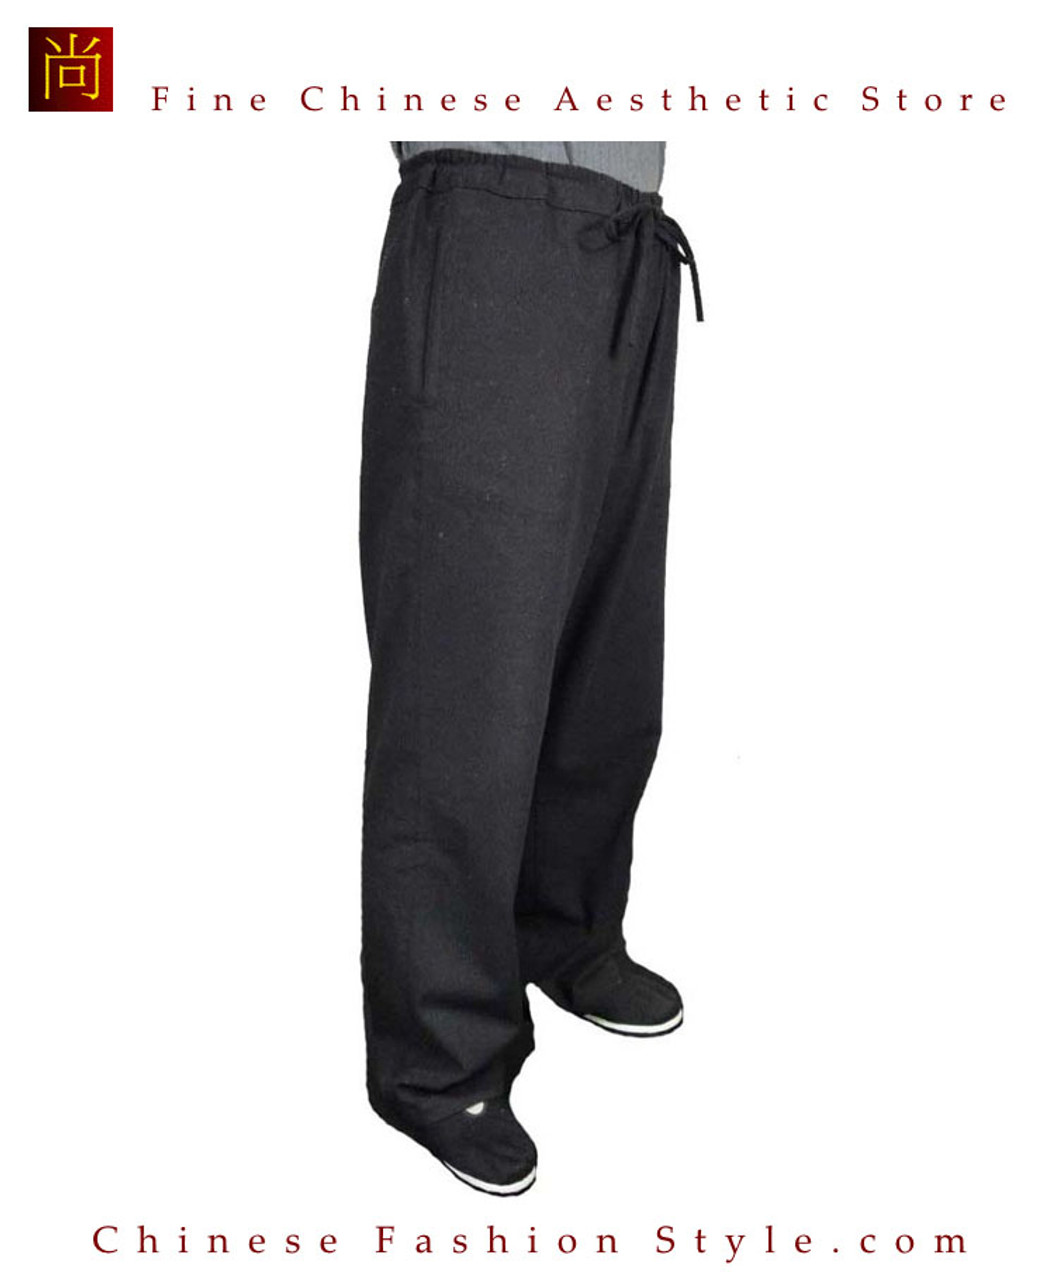 Scoop Women's Wide Leg Trousers with Elastic Back Waist, Sizes XS-XXL -  Walmart.com